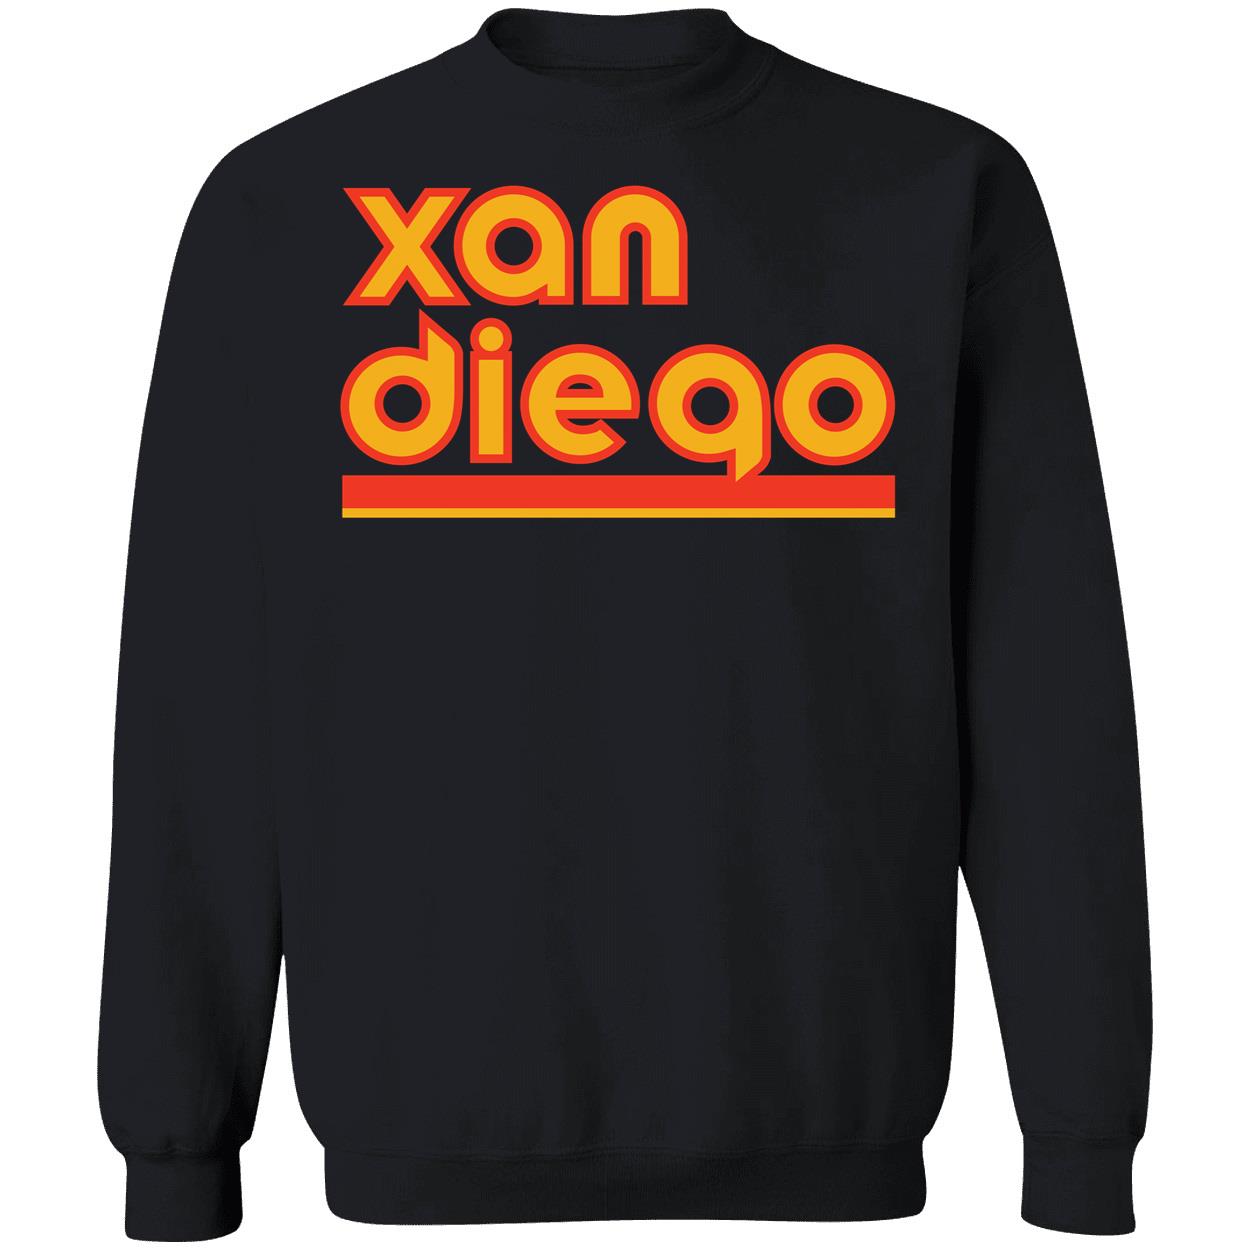 OneRockin Xander Bogaerts Xan Diego Retro Long Sleeve Shirt